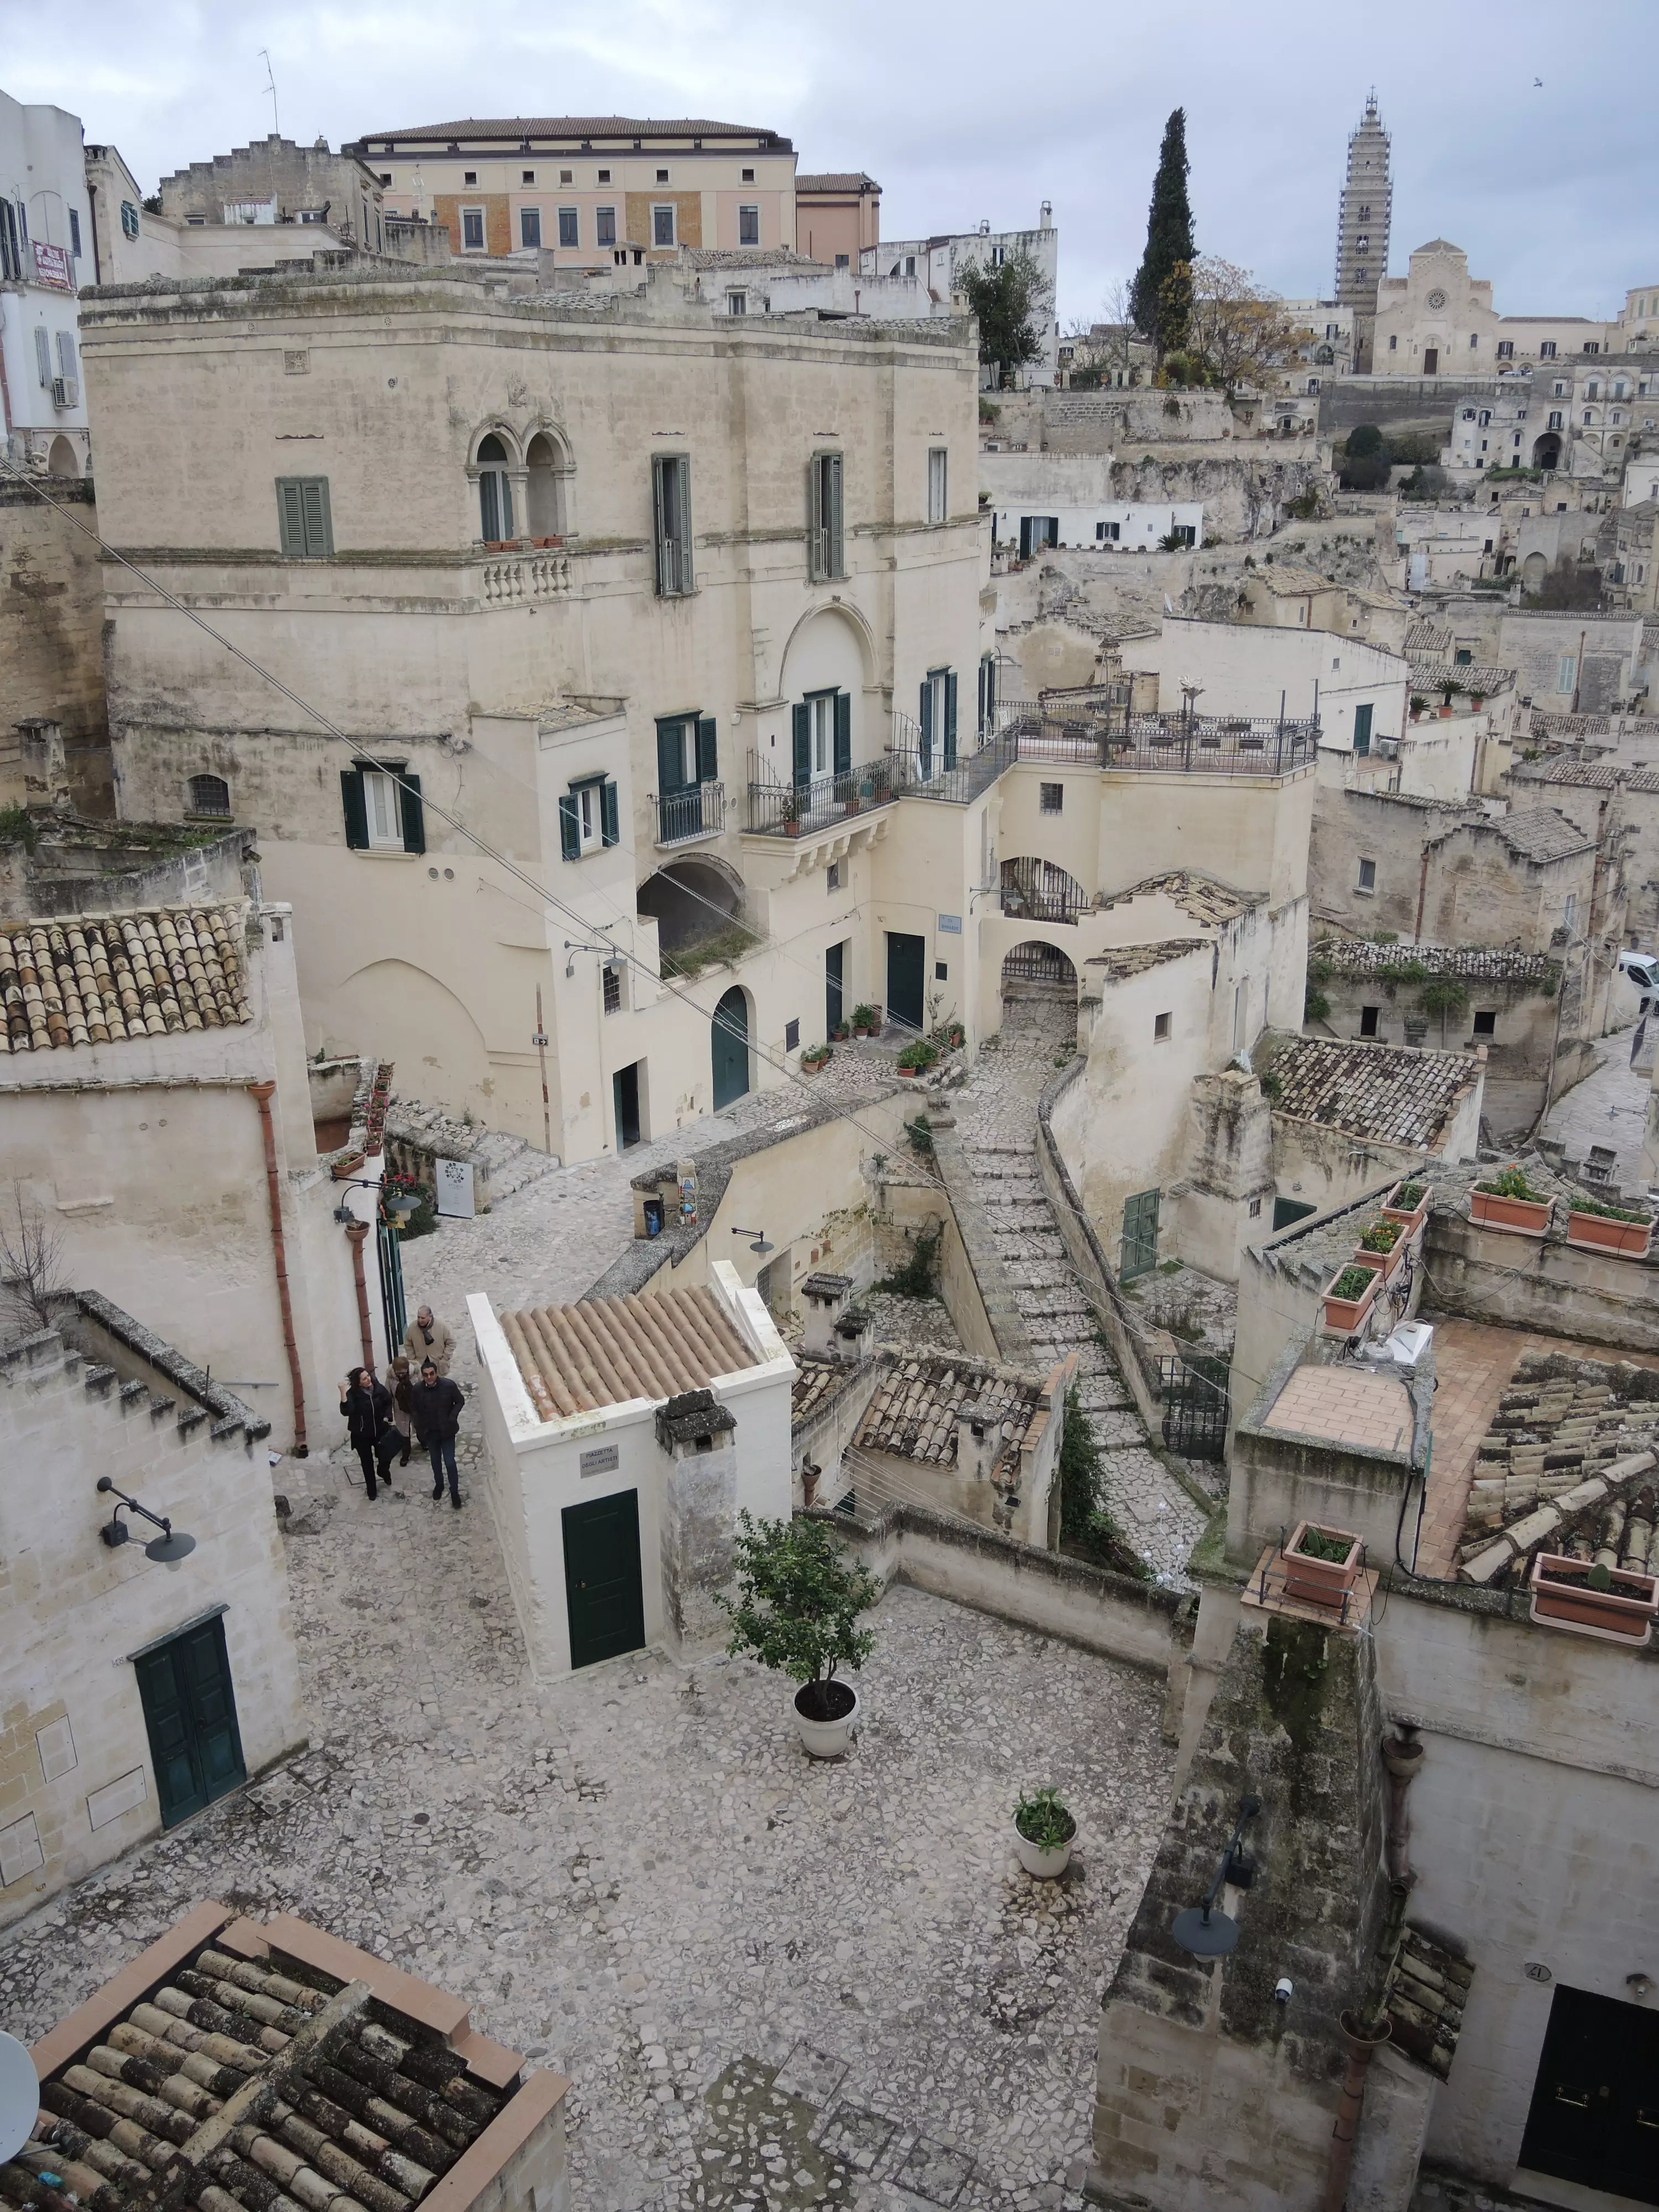 Matera, the Italian city used to film the scene.